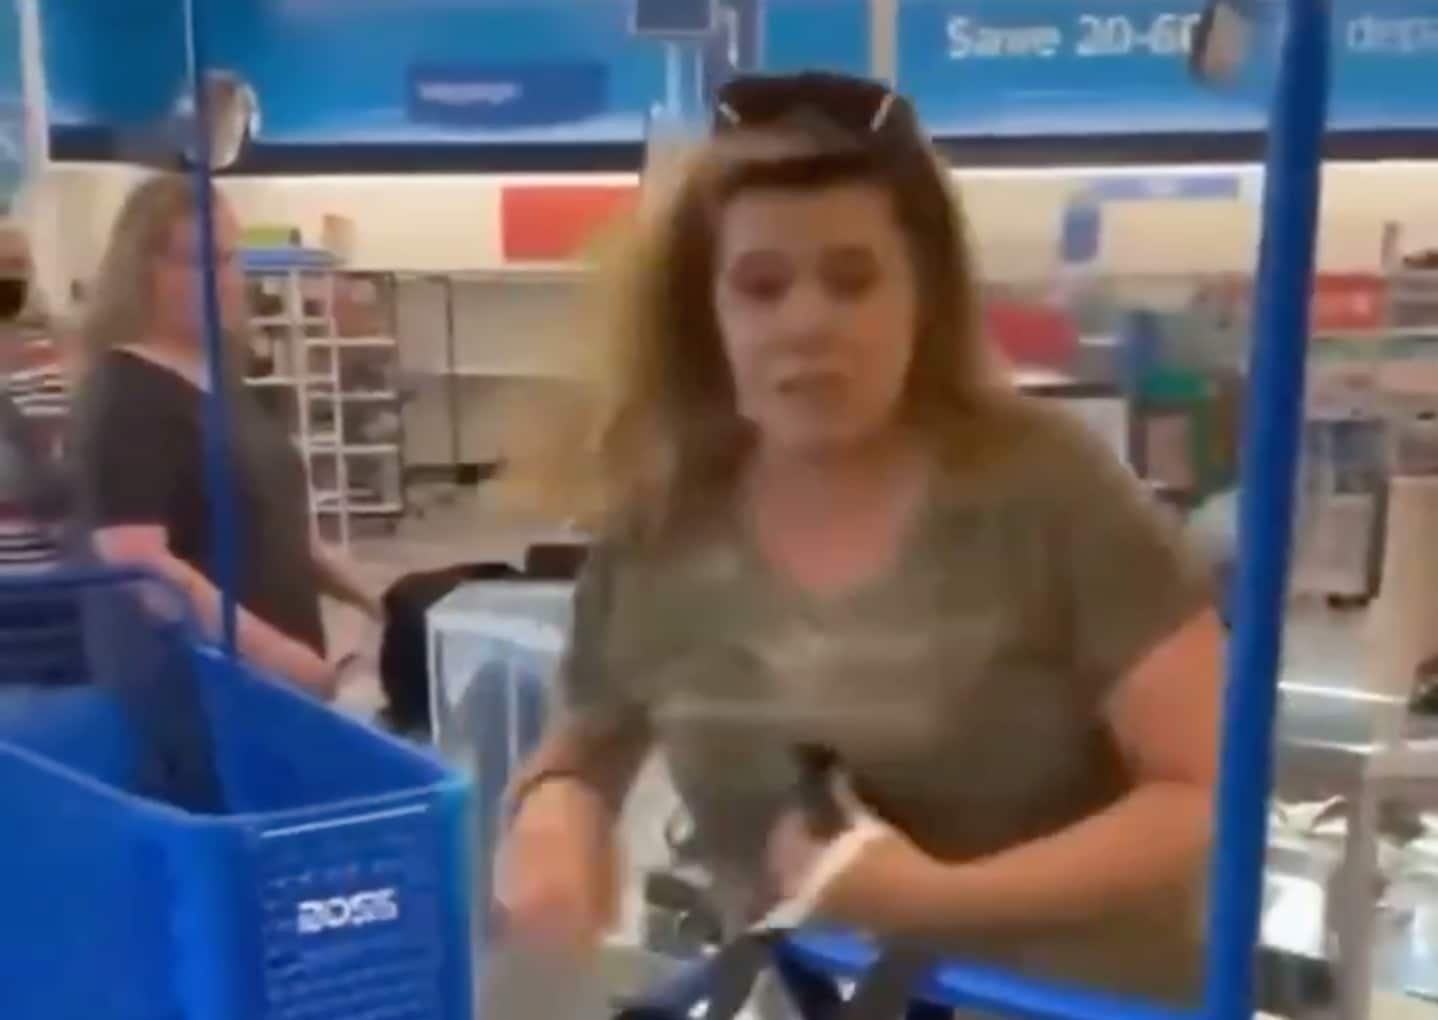 White woman goes on racist tirade, calls Black employee 'monkey, Black b****' in viral video